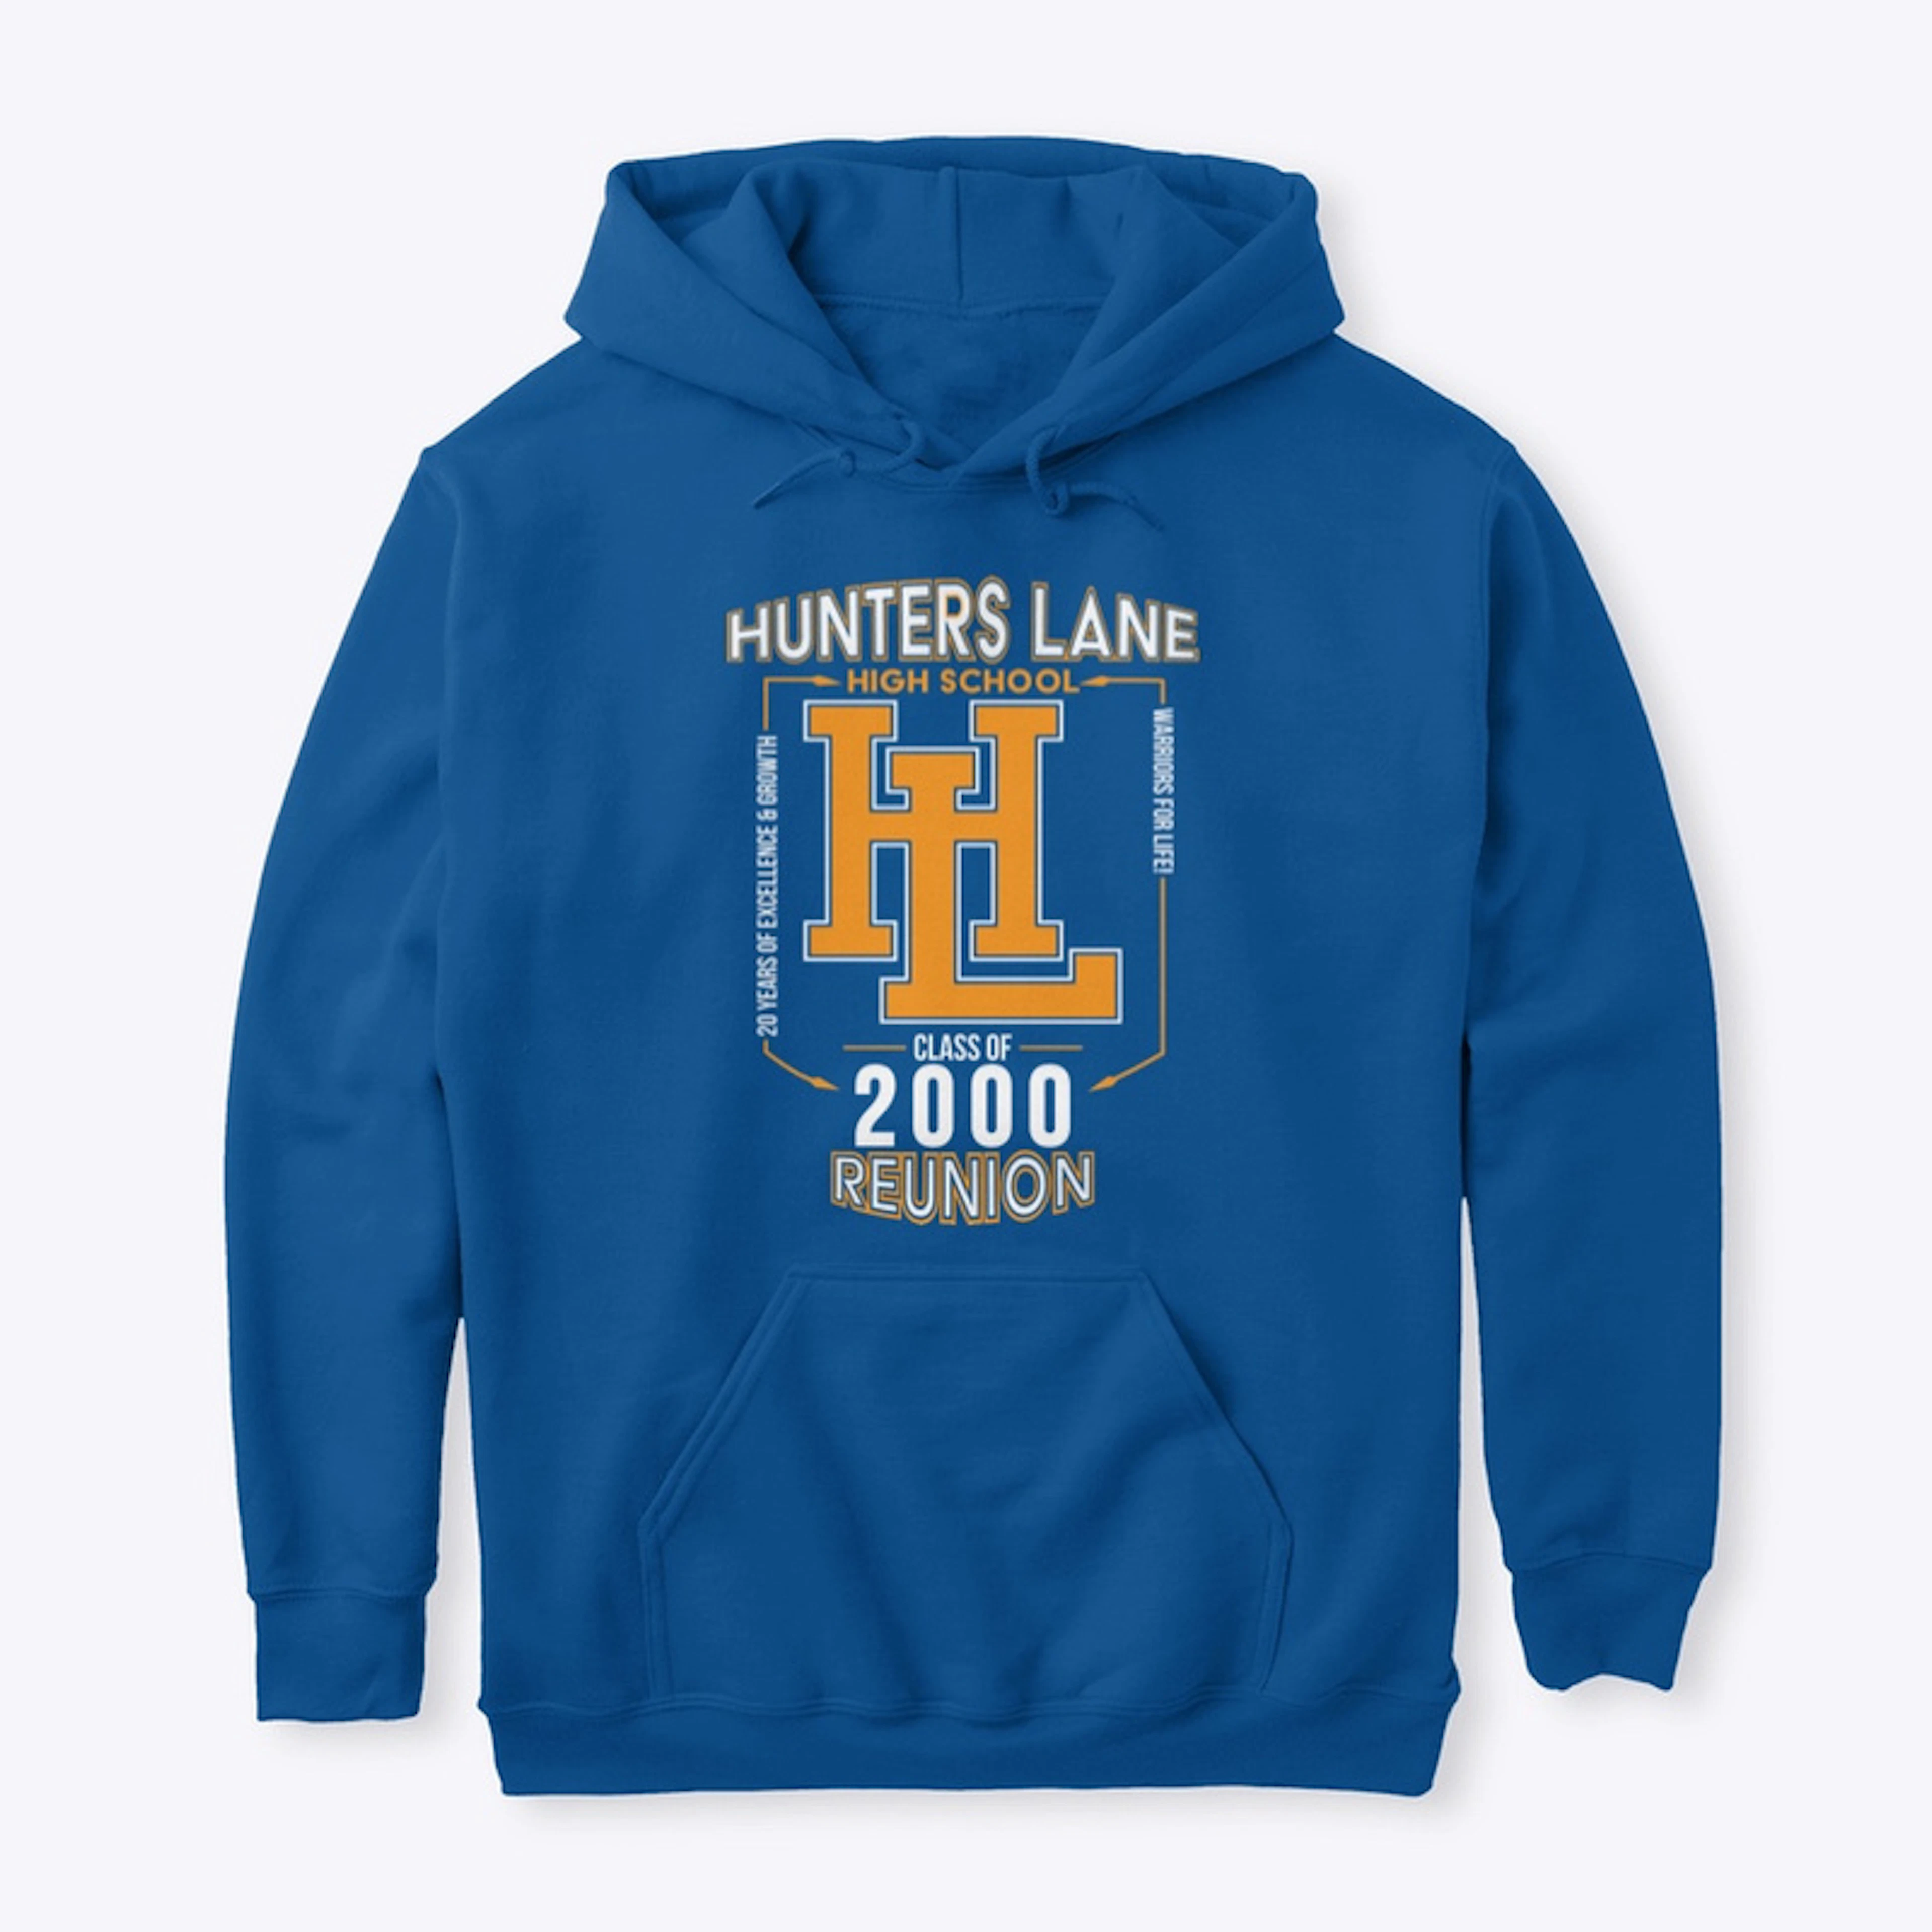 Hunters Lane reunion 